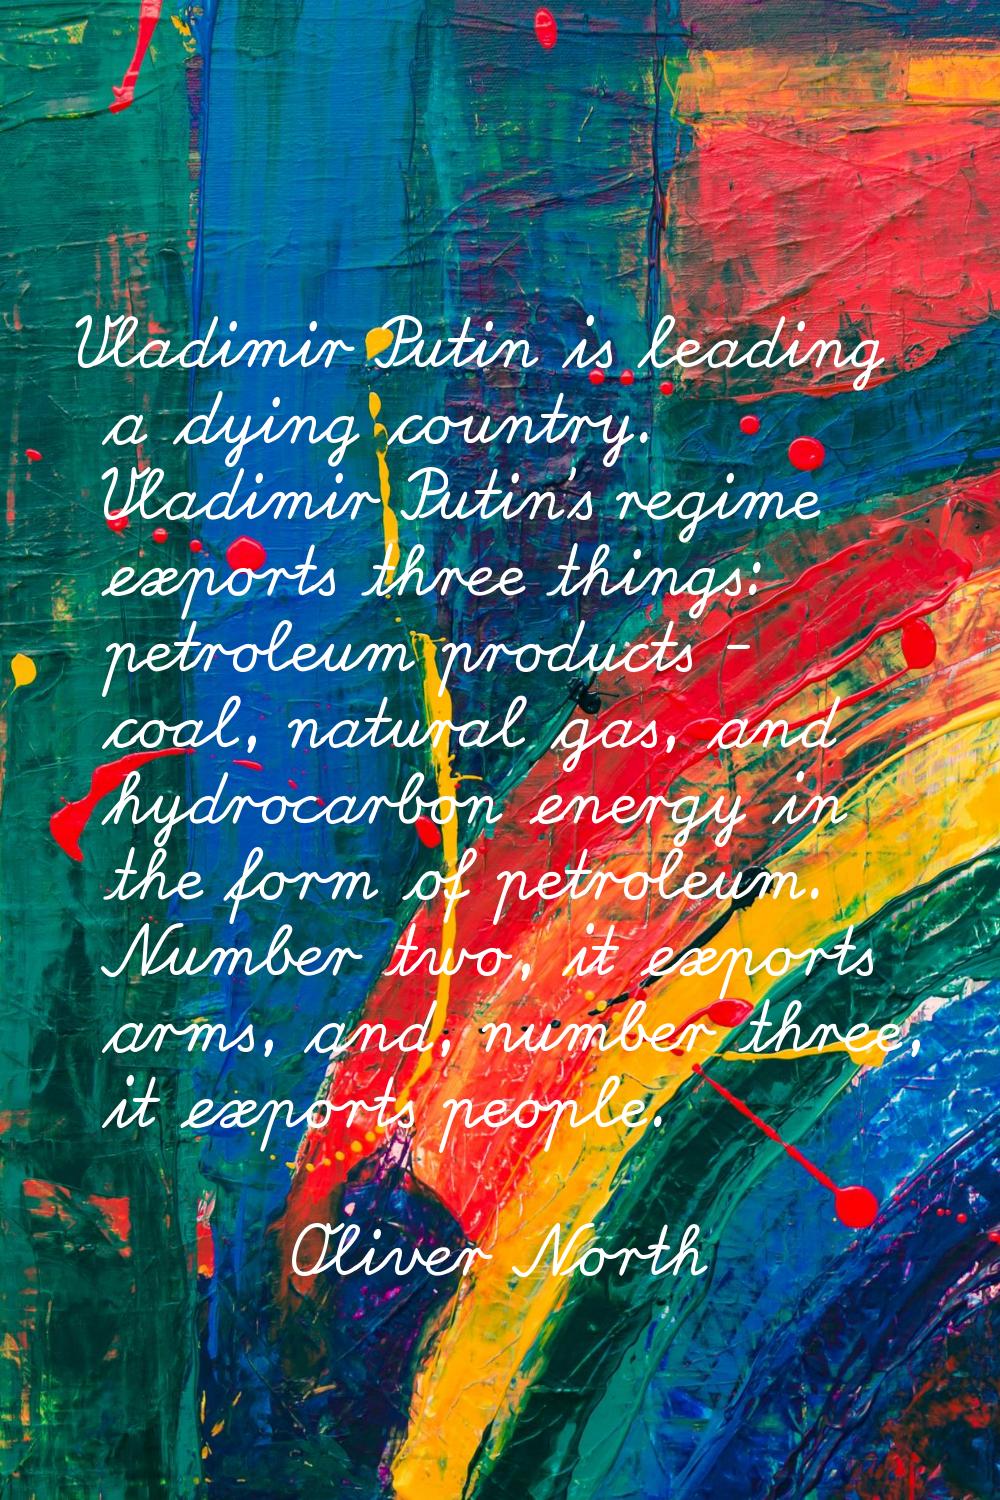 Vladimir Putin is leading a dying country. Vladimir Putin's regime exports three things: petroleum 